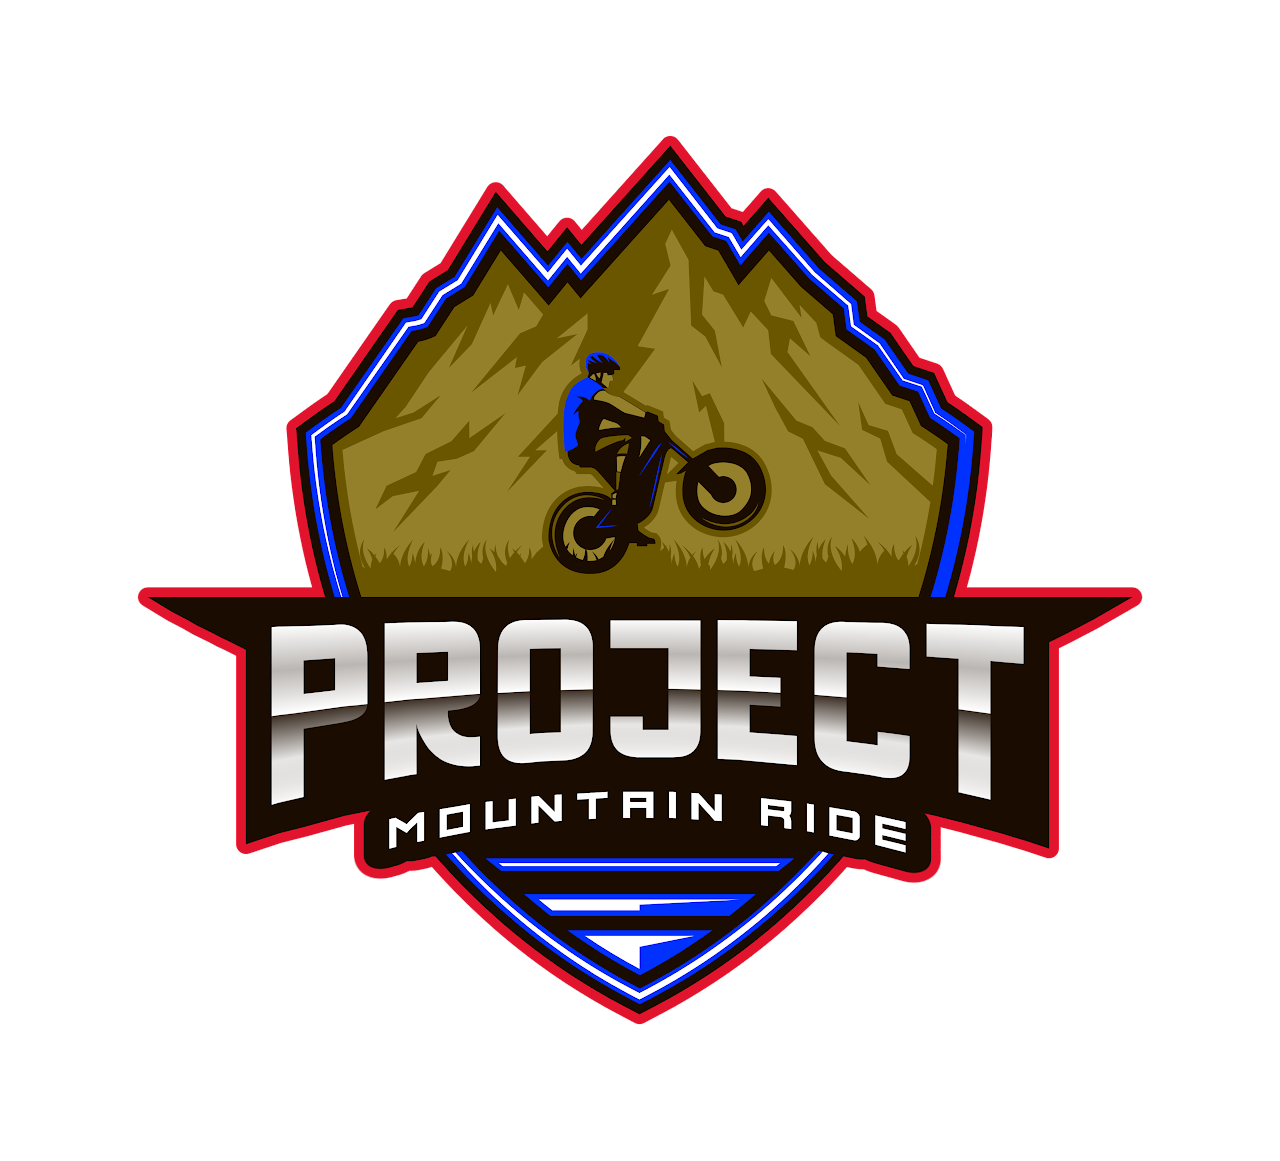 image of project bike logo